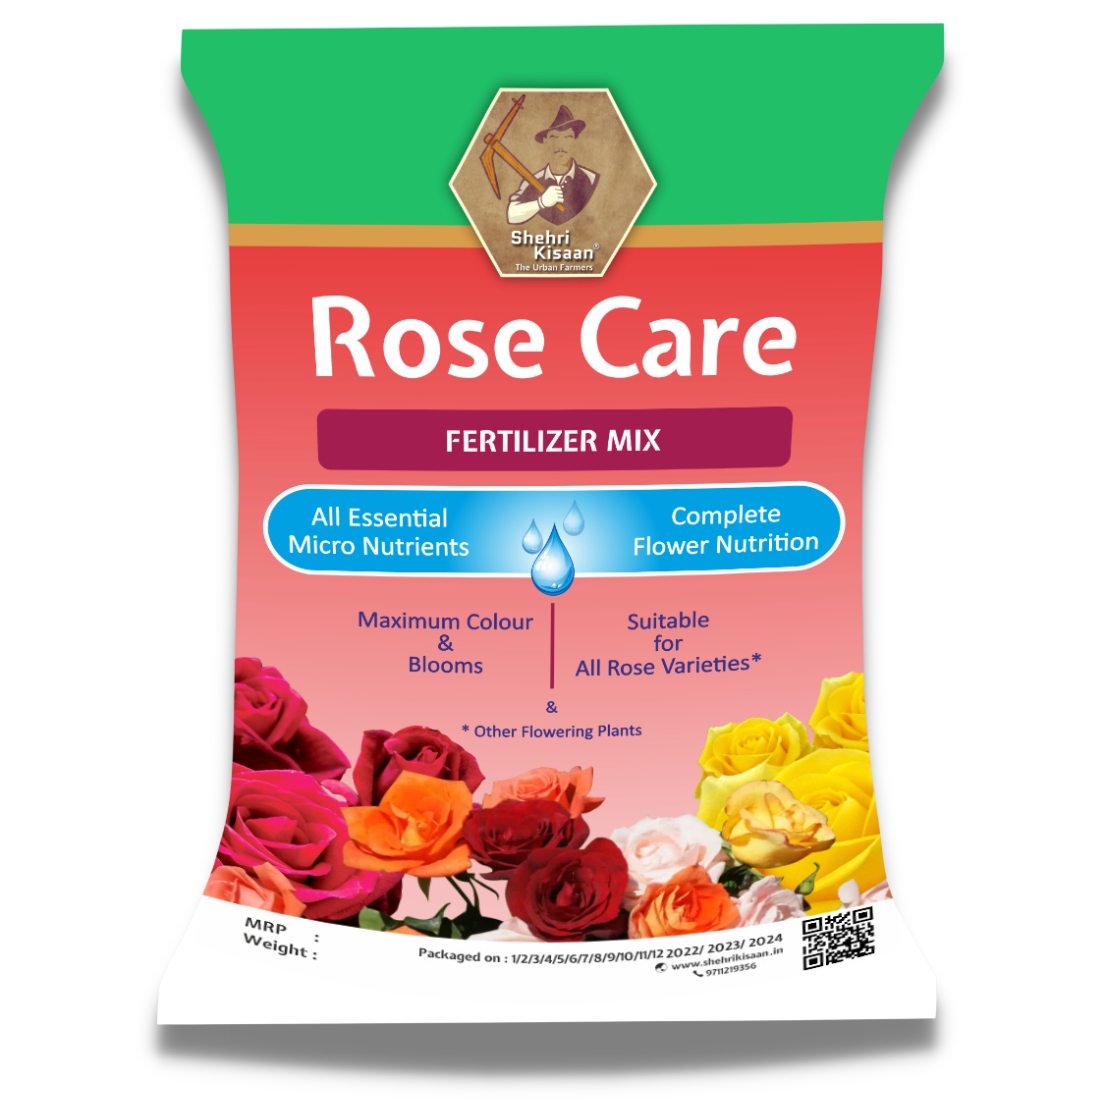 Rose care fertilizer